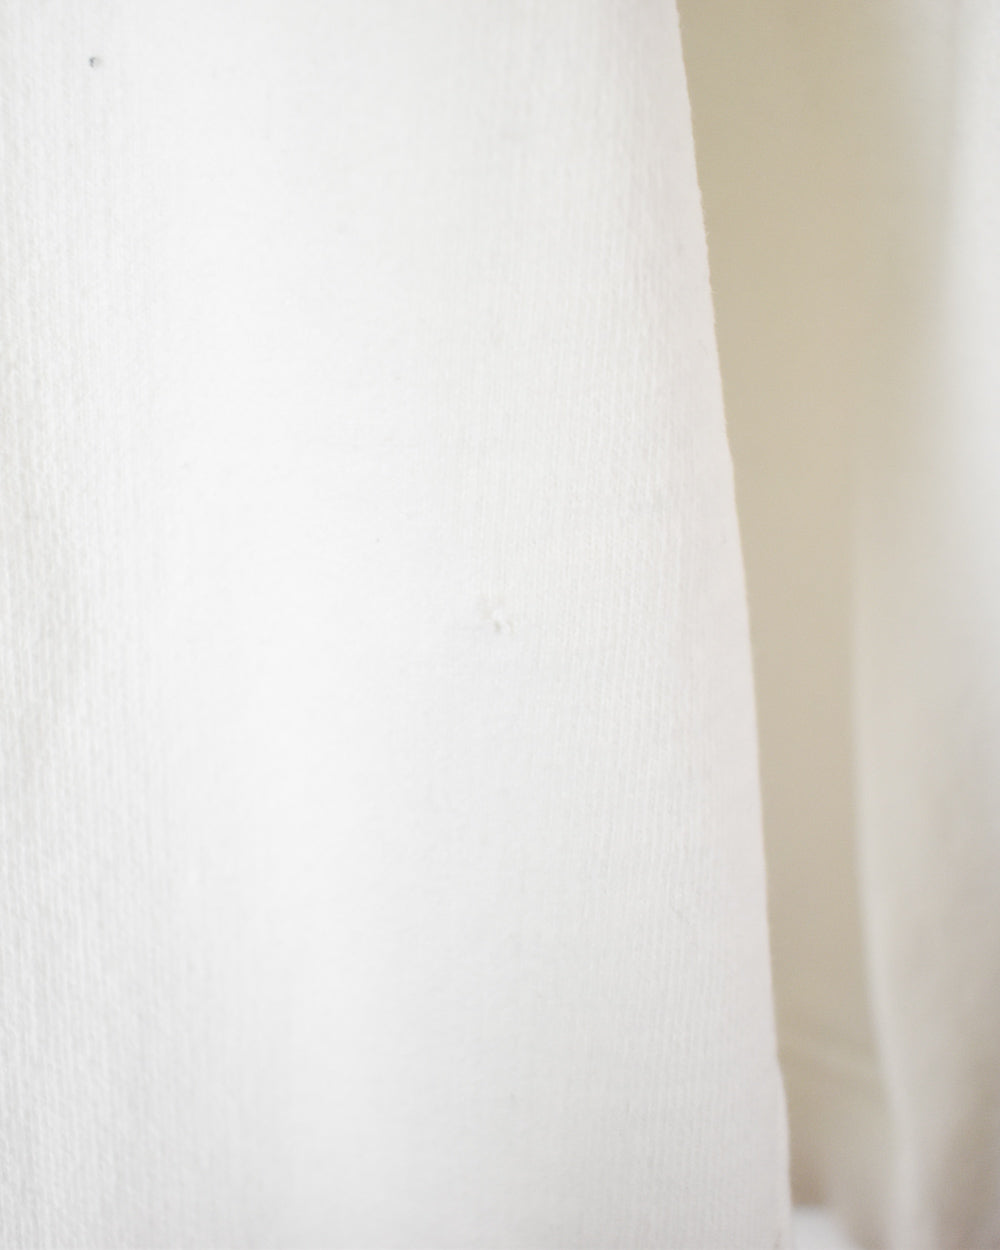 White Fila Sweatshirt - Large